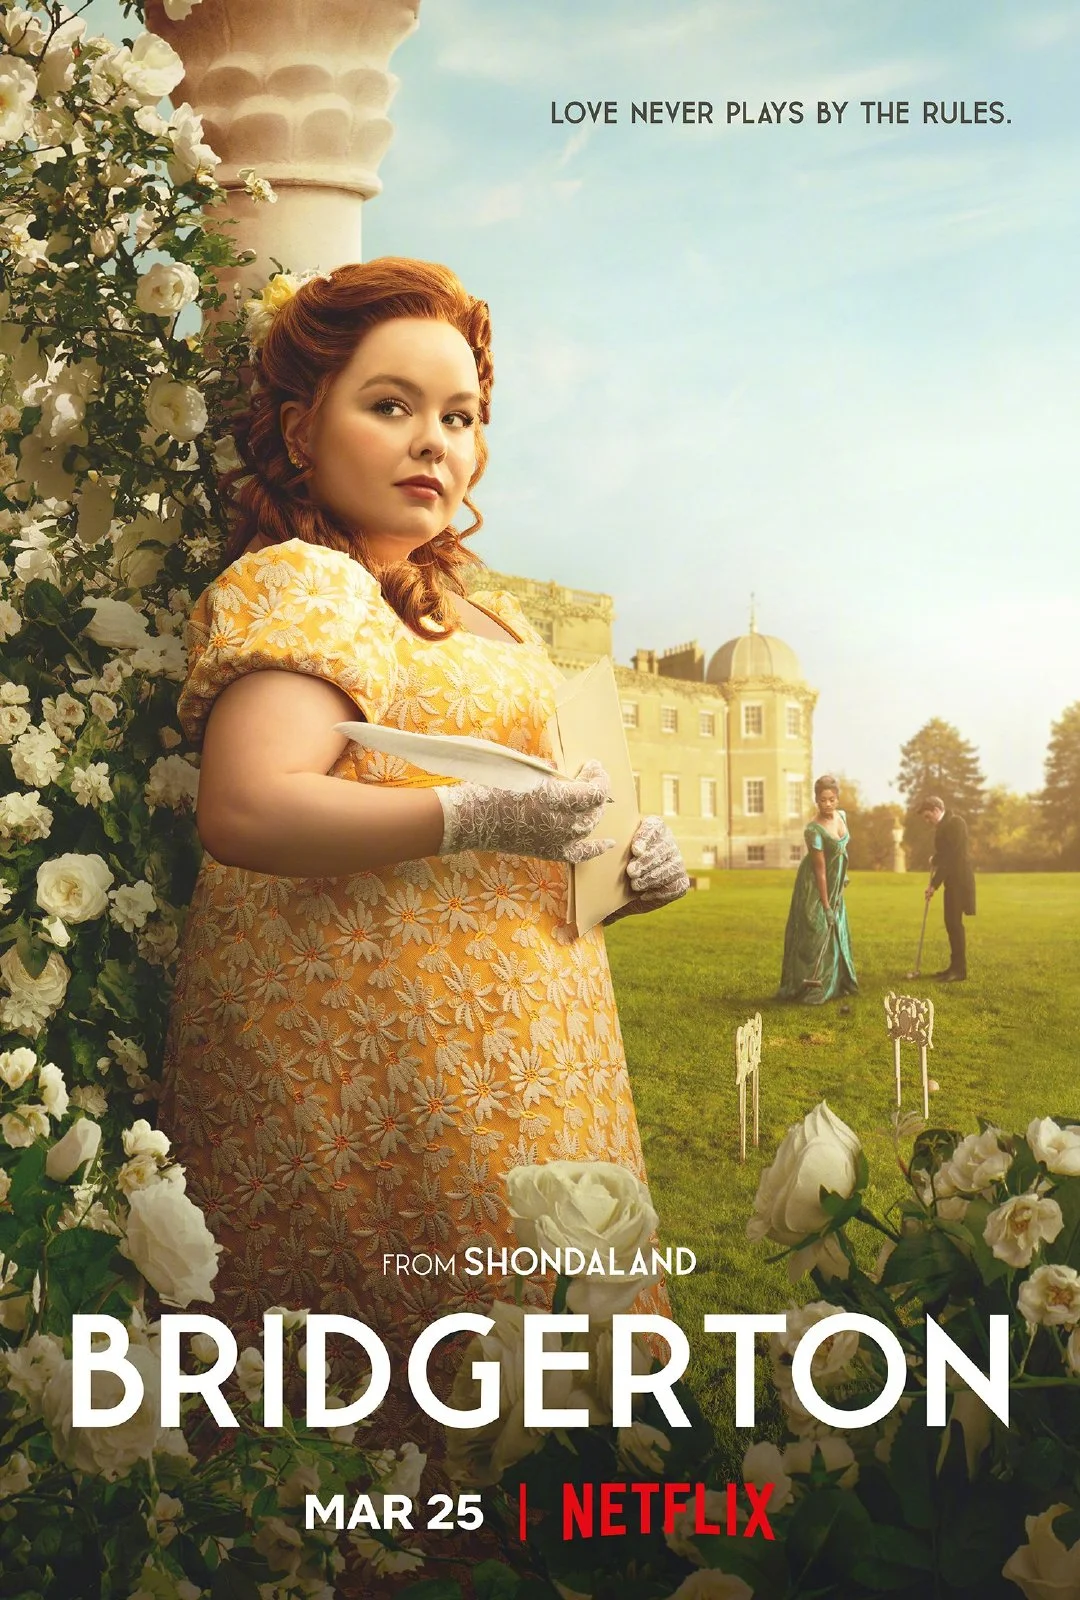 "Bridgerton Season 2" releases a set of character posters